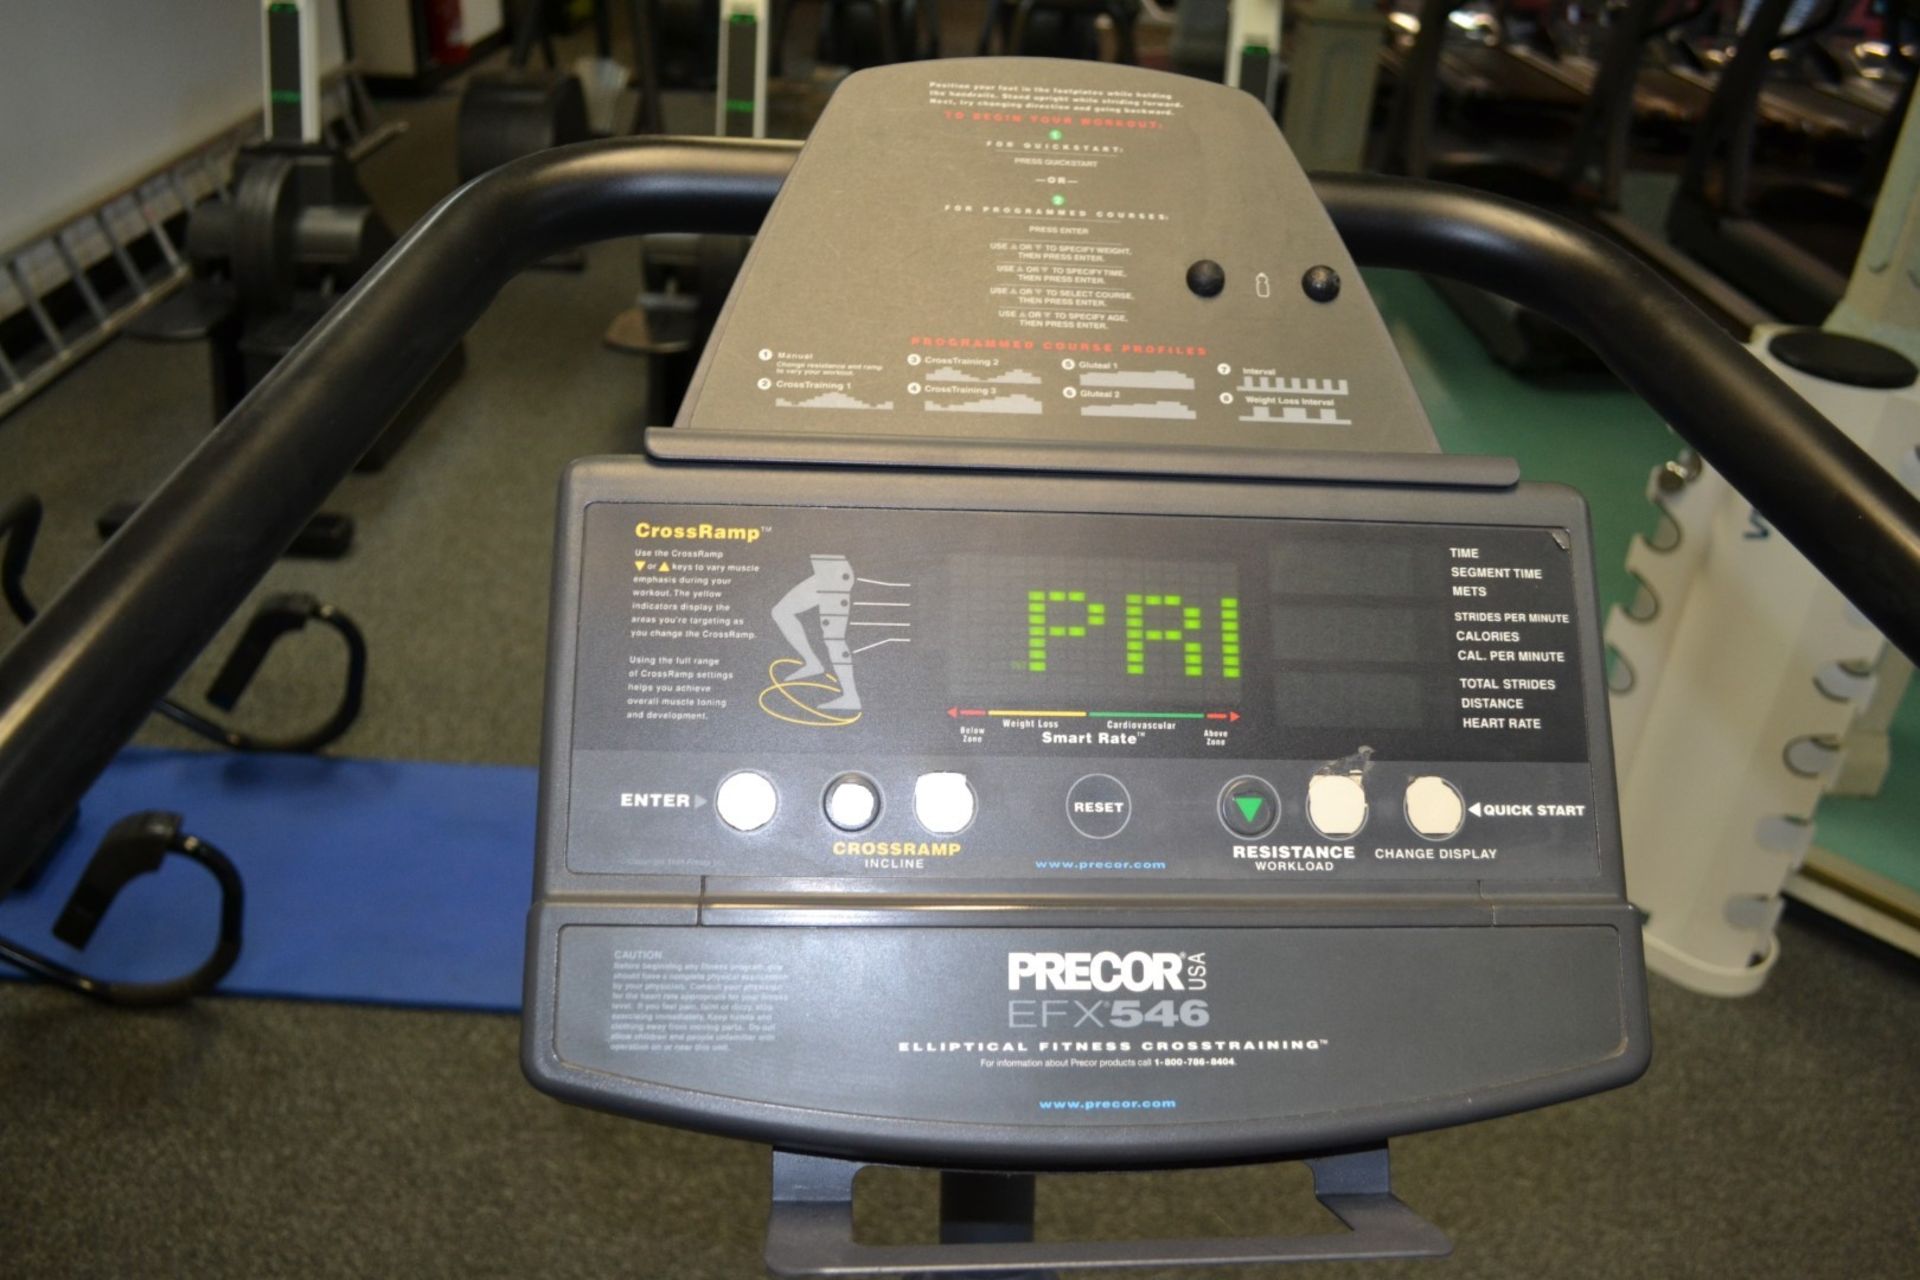 1 x Precor EFX 546 Cross-Trainer Gym Machine - Dimensions: L200 x W90 x H155cm - Ref: J2038/1FG - - Image 3 of 3